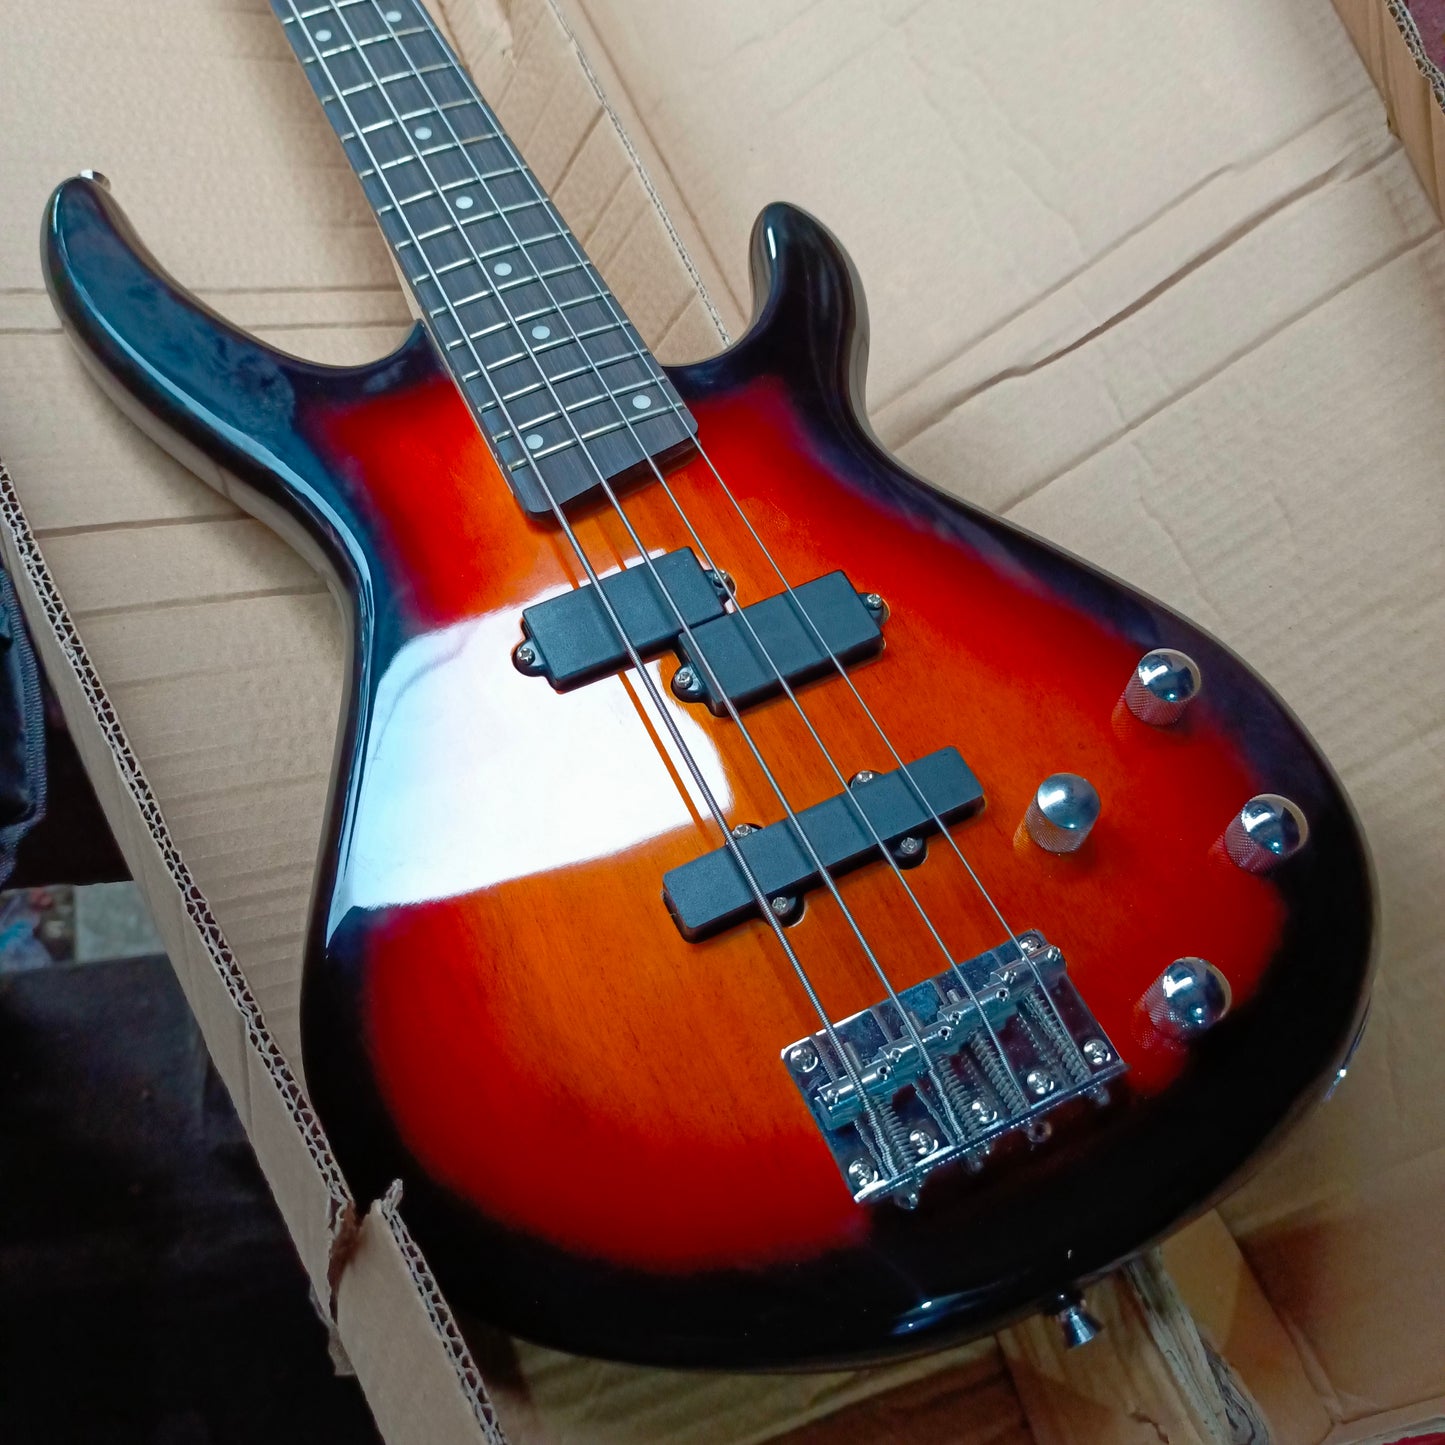 Premium 4-String 22-Flet Electric Guitar with 4 volume knob  - Brand New